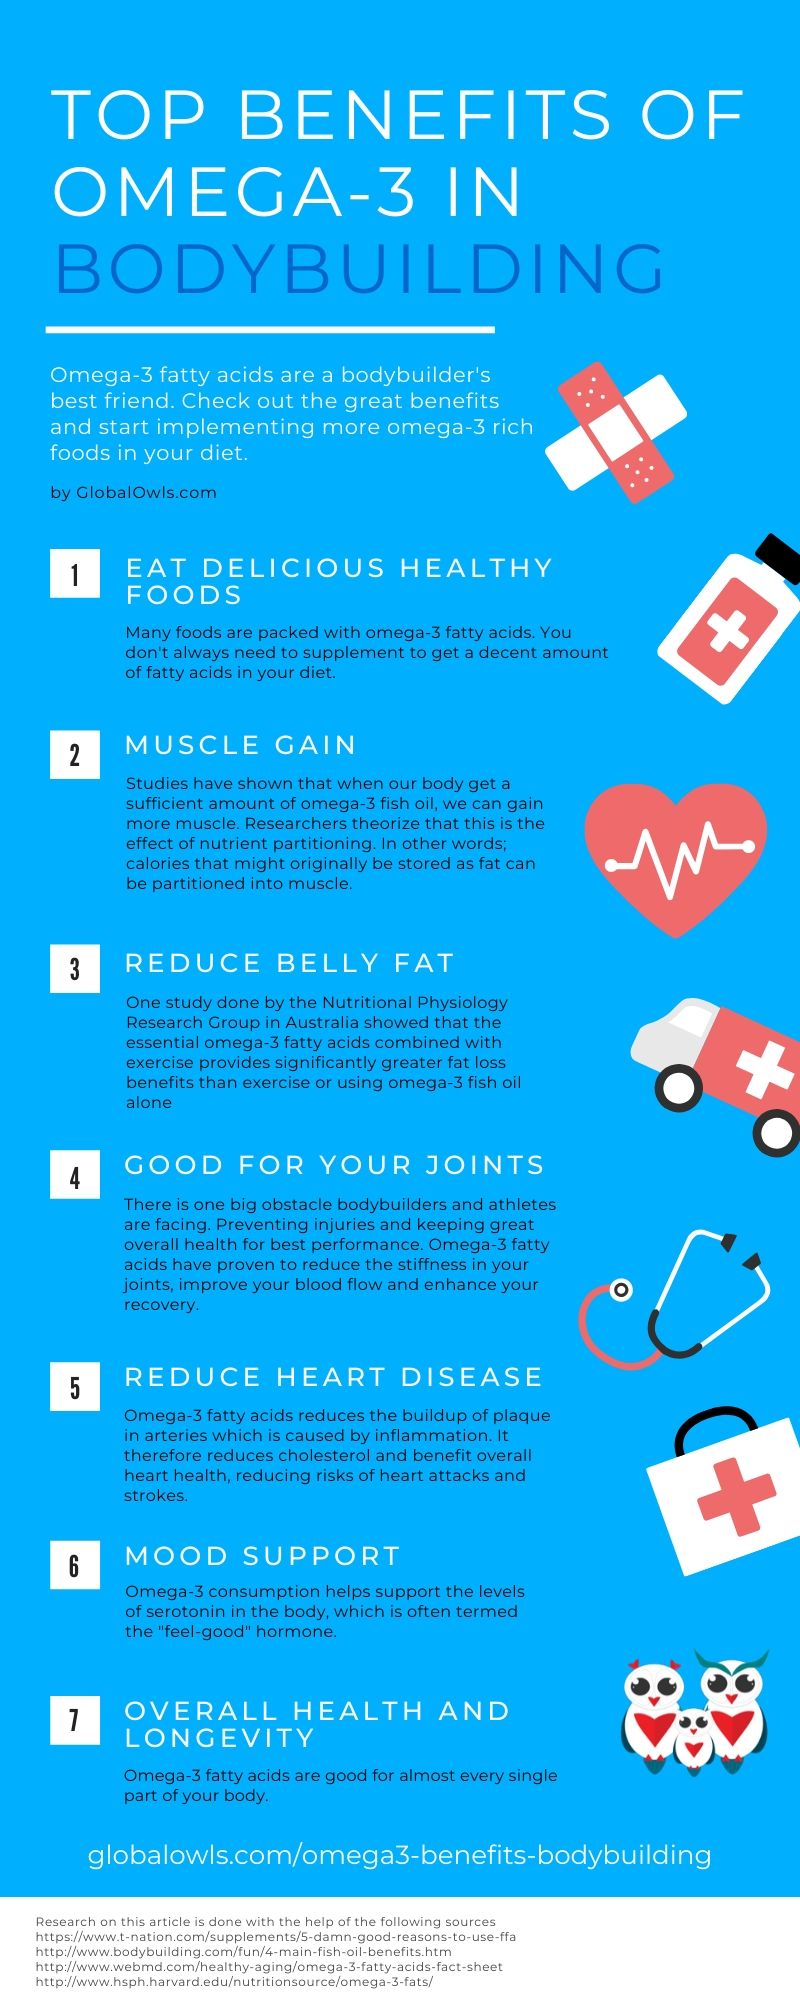 Omega-3 benefits in bodybuilding